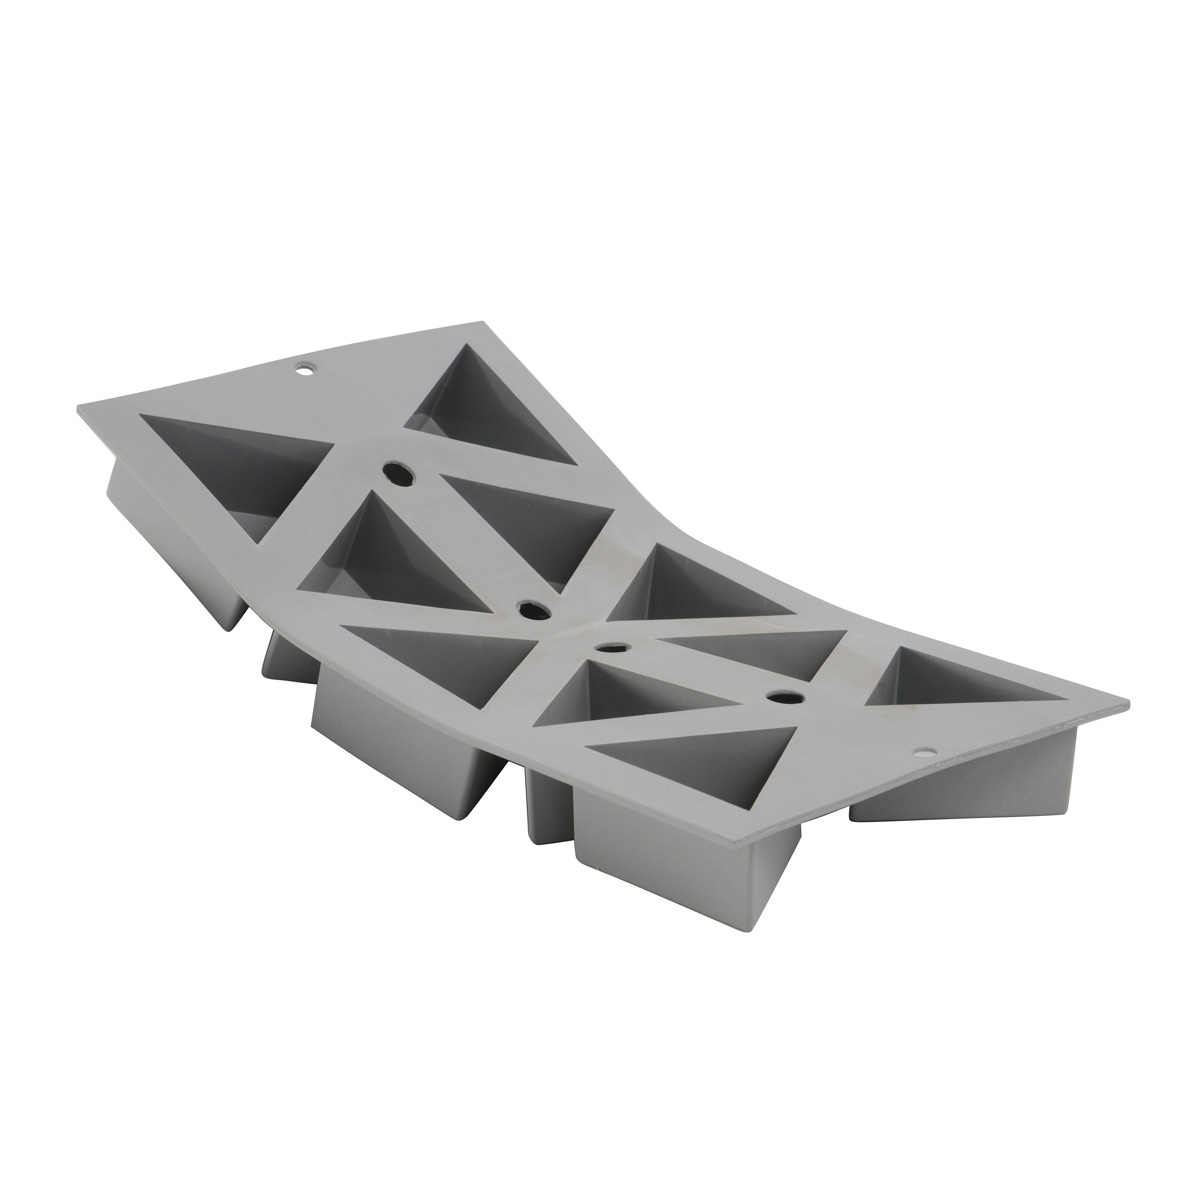 de Buyer Elastomoule Silikonform für 10 Dreiecke / mit Antihaft-Eigenschaften